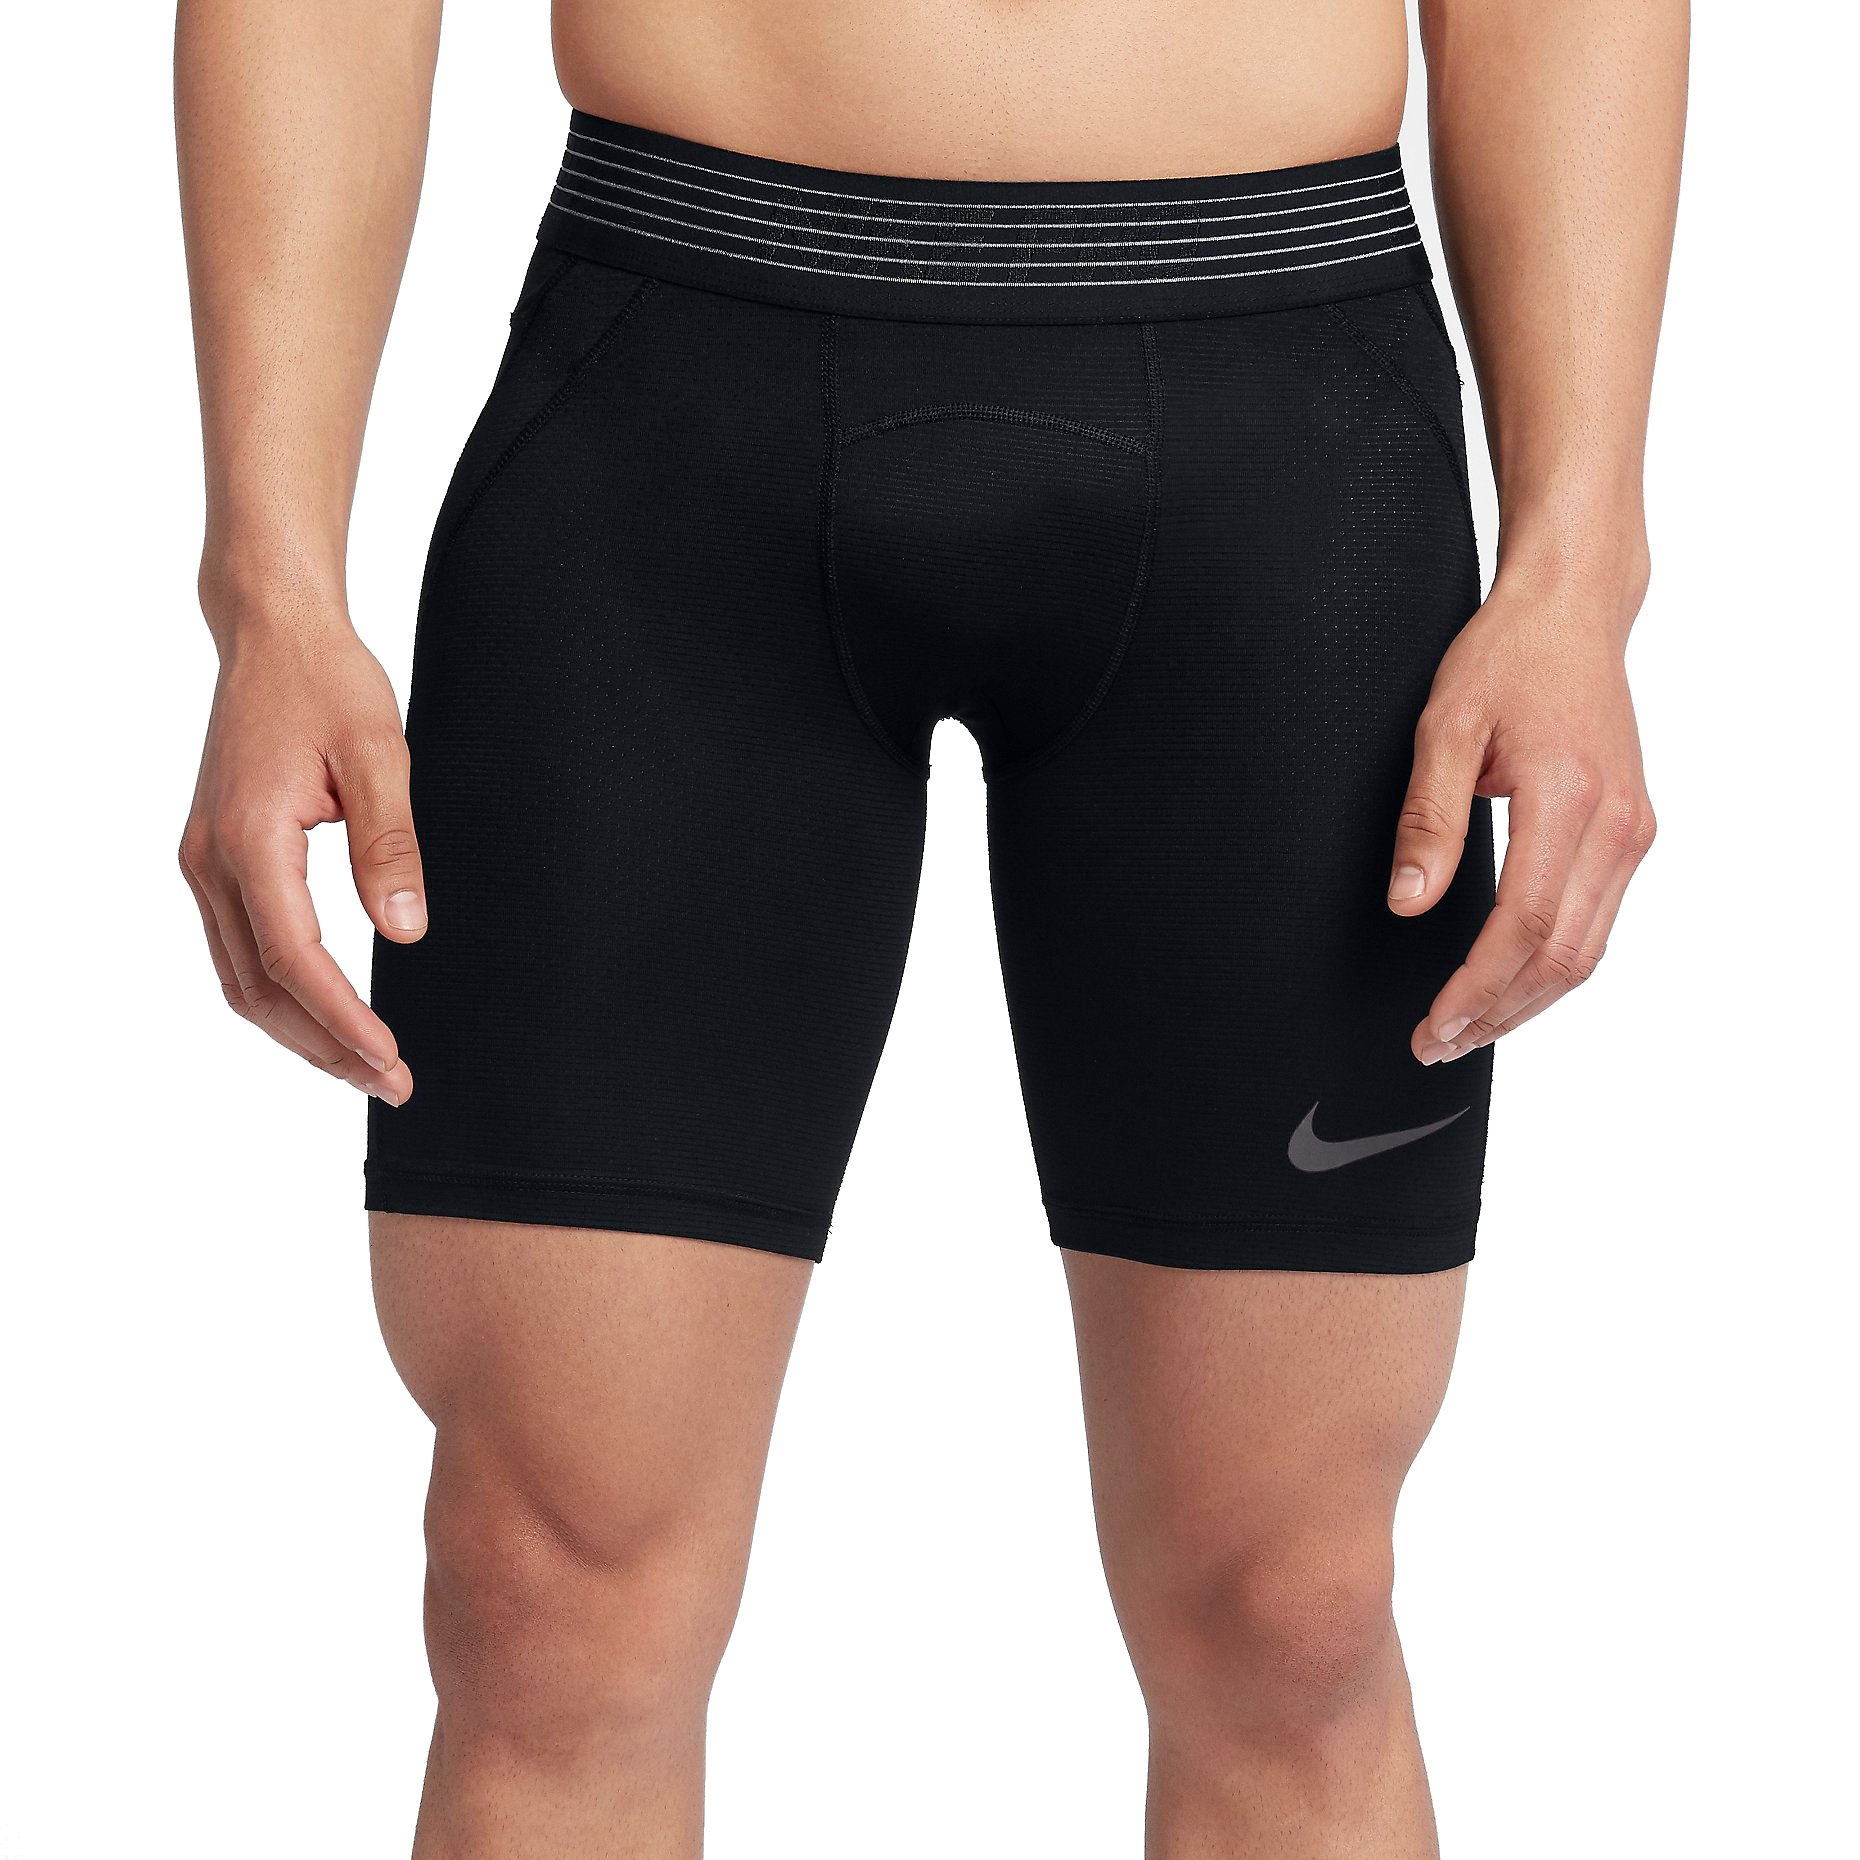 nike short compression shorts